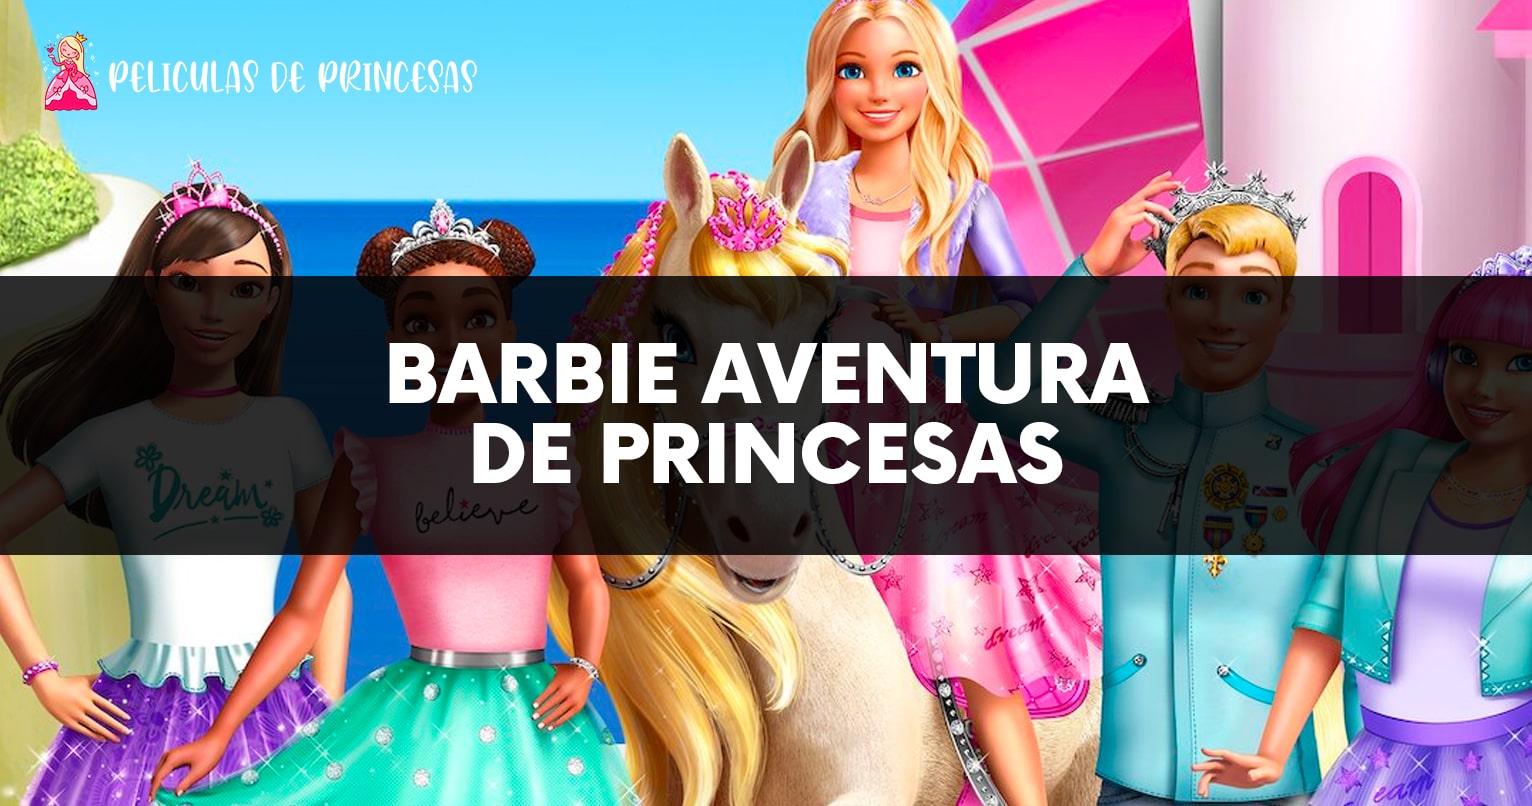 Barbie aventura de princesas – Película completa Gratis Online